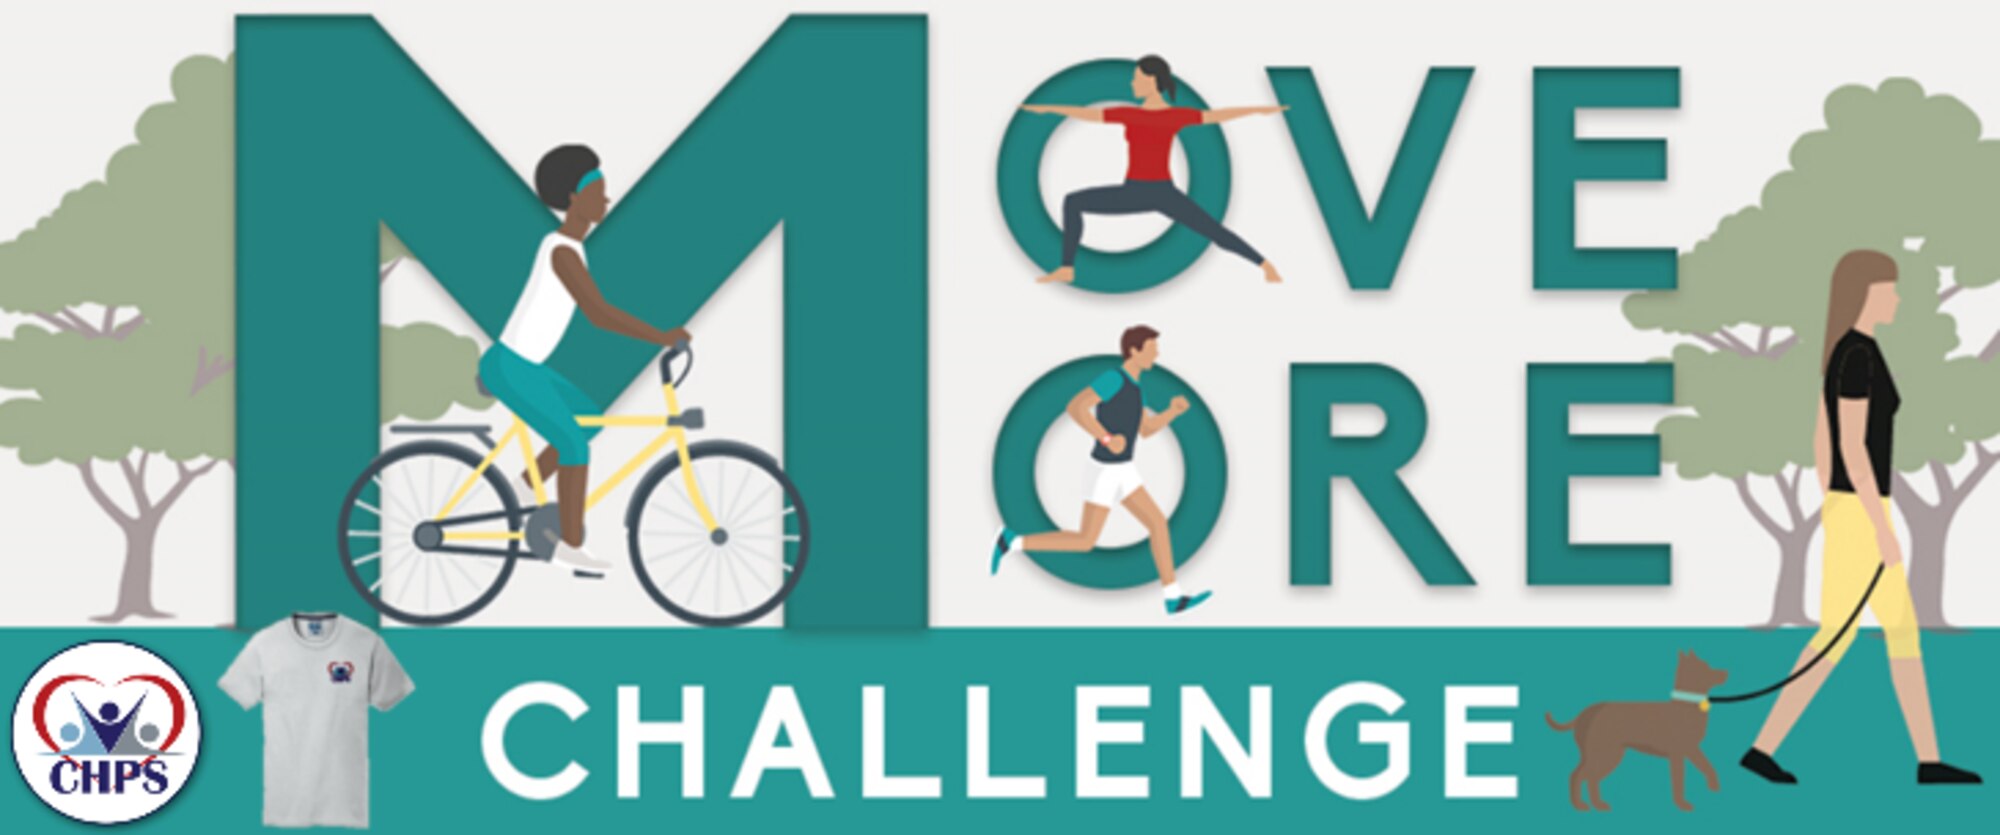 Move More Challenge